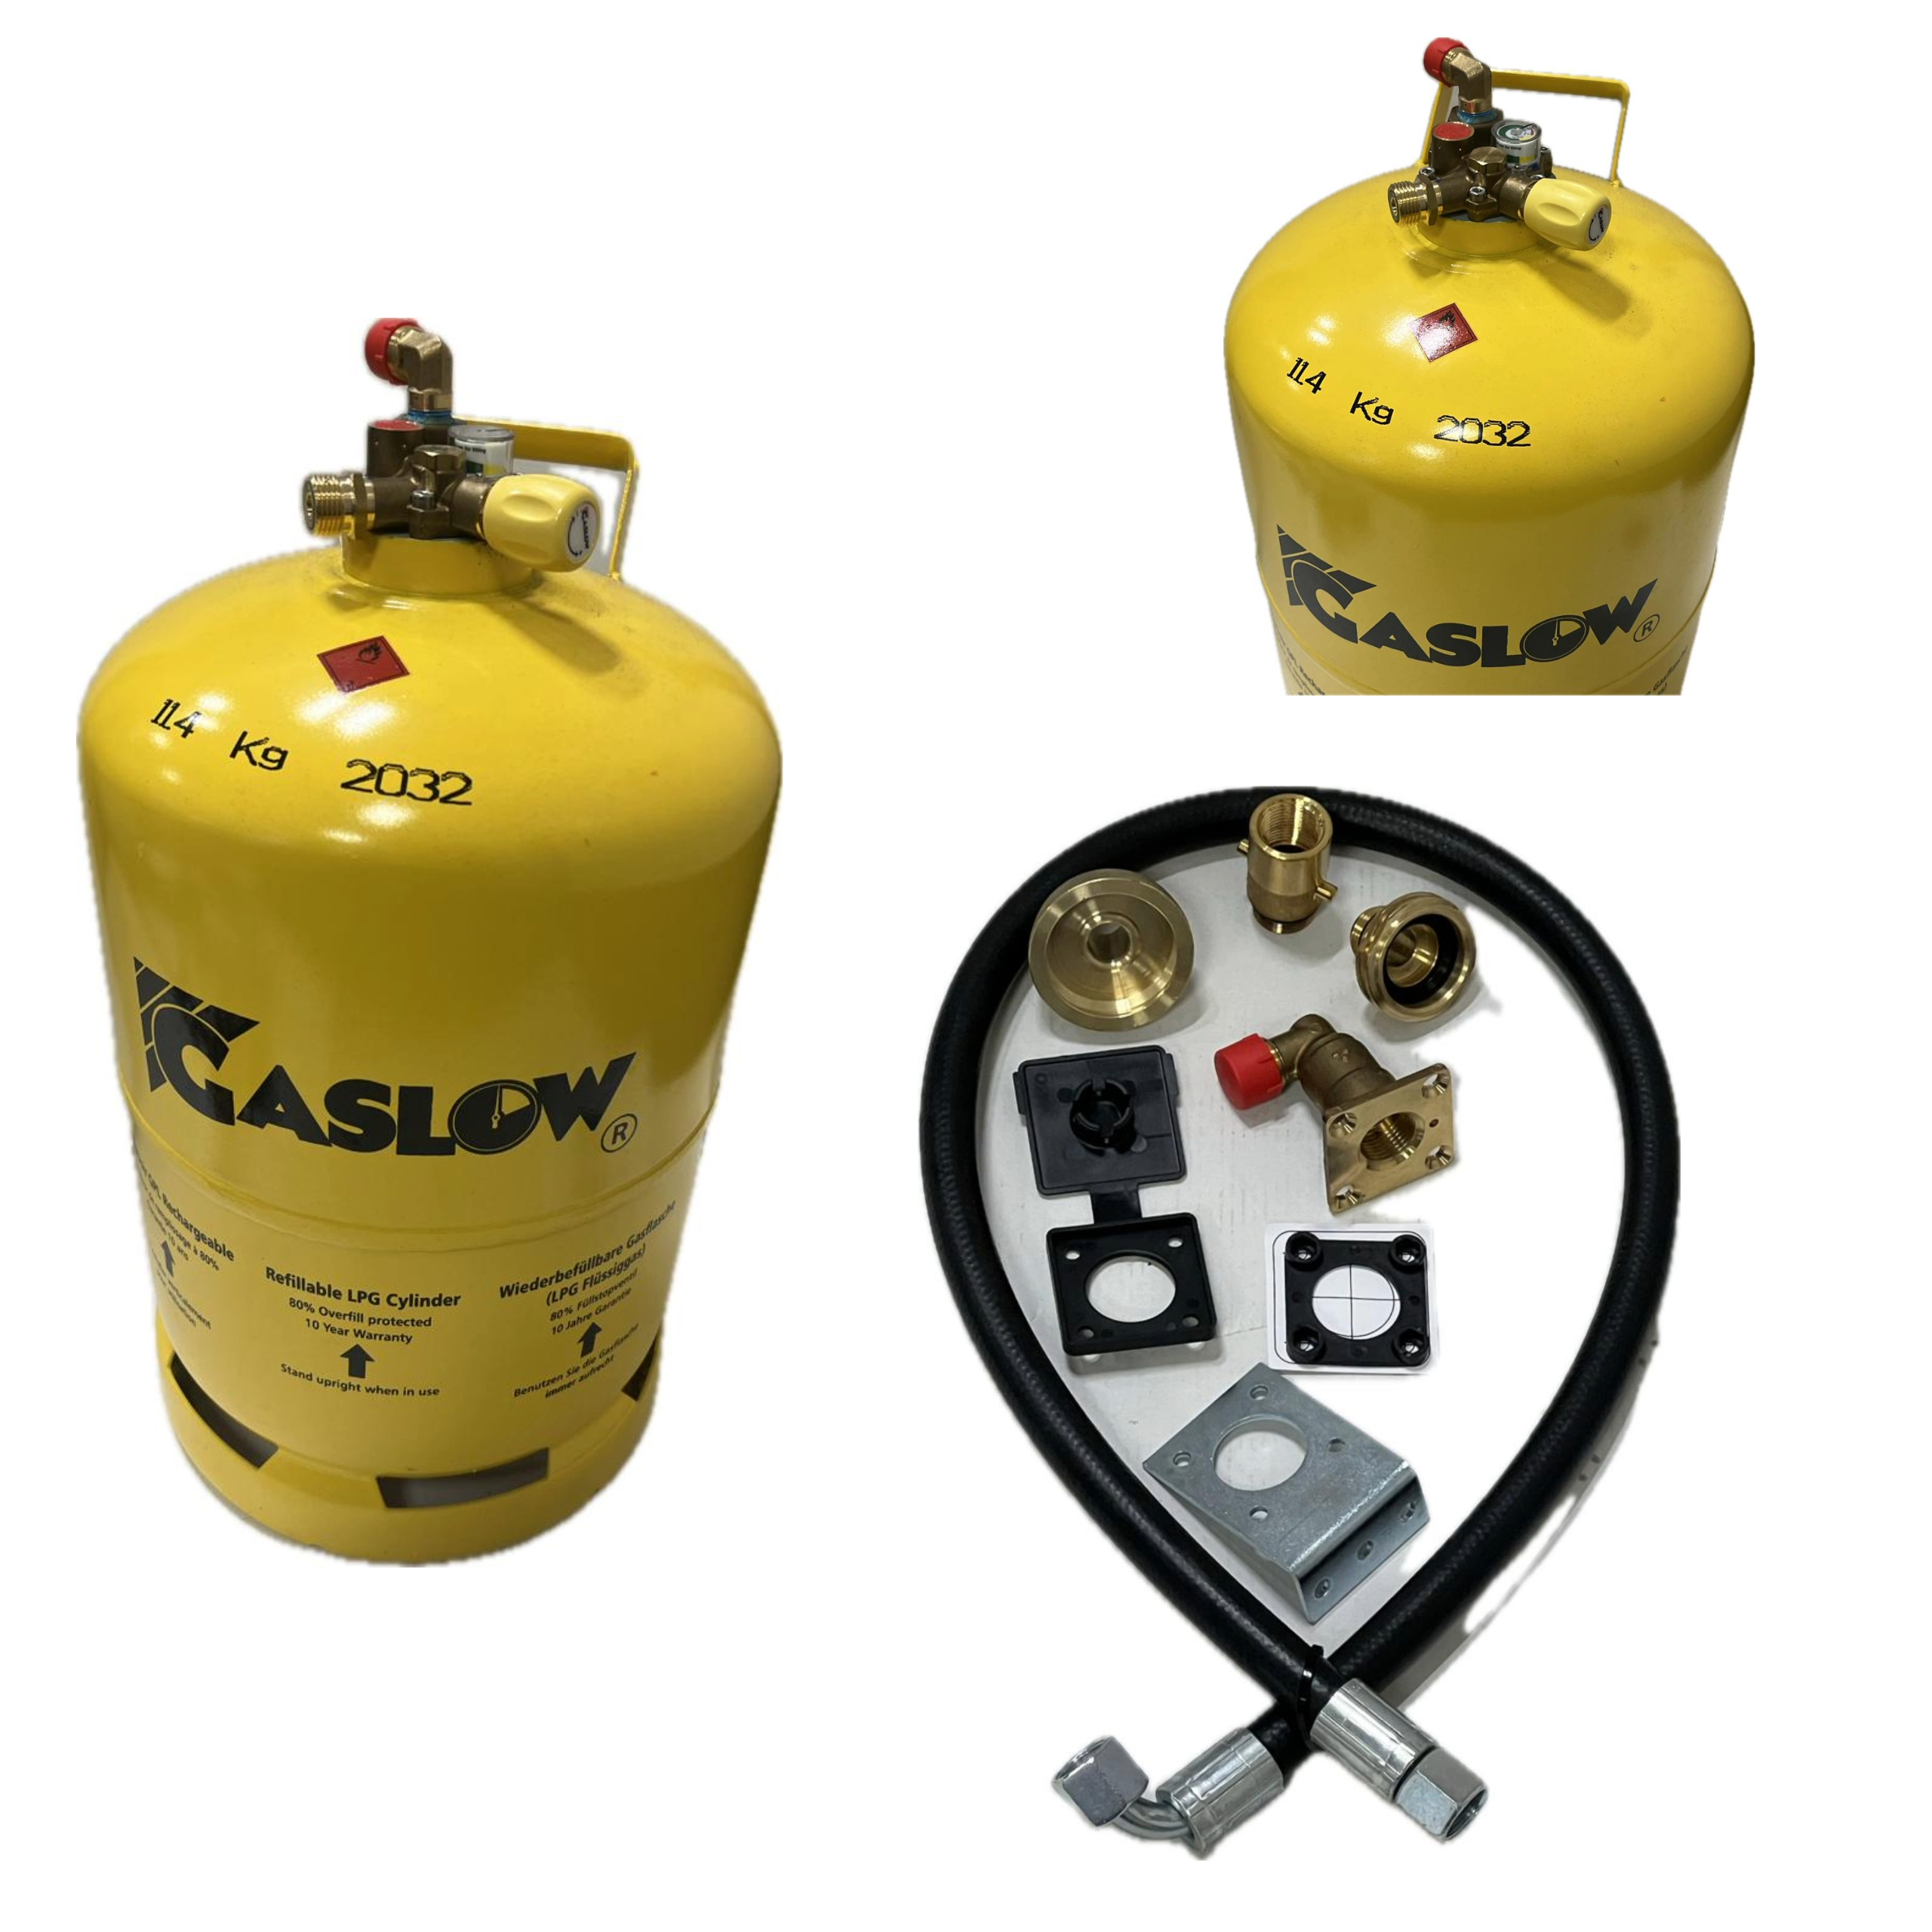 Gasflasche Gaslow 6 kg gelb 2020 wiederbefüllbar (460x246mm)+Adapter